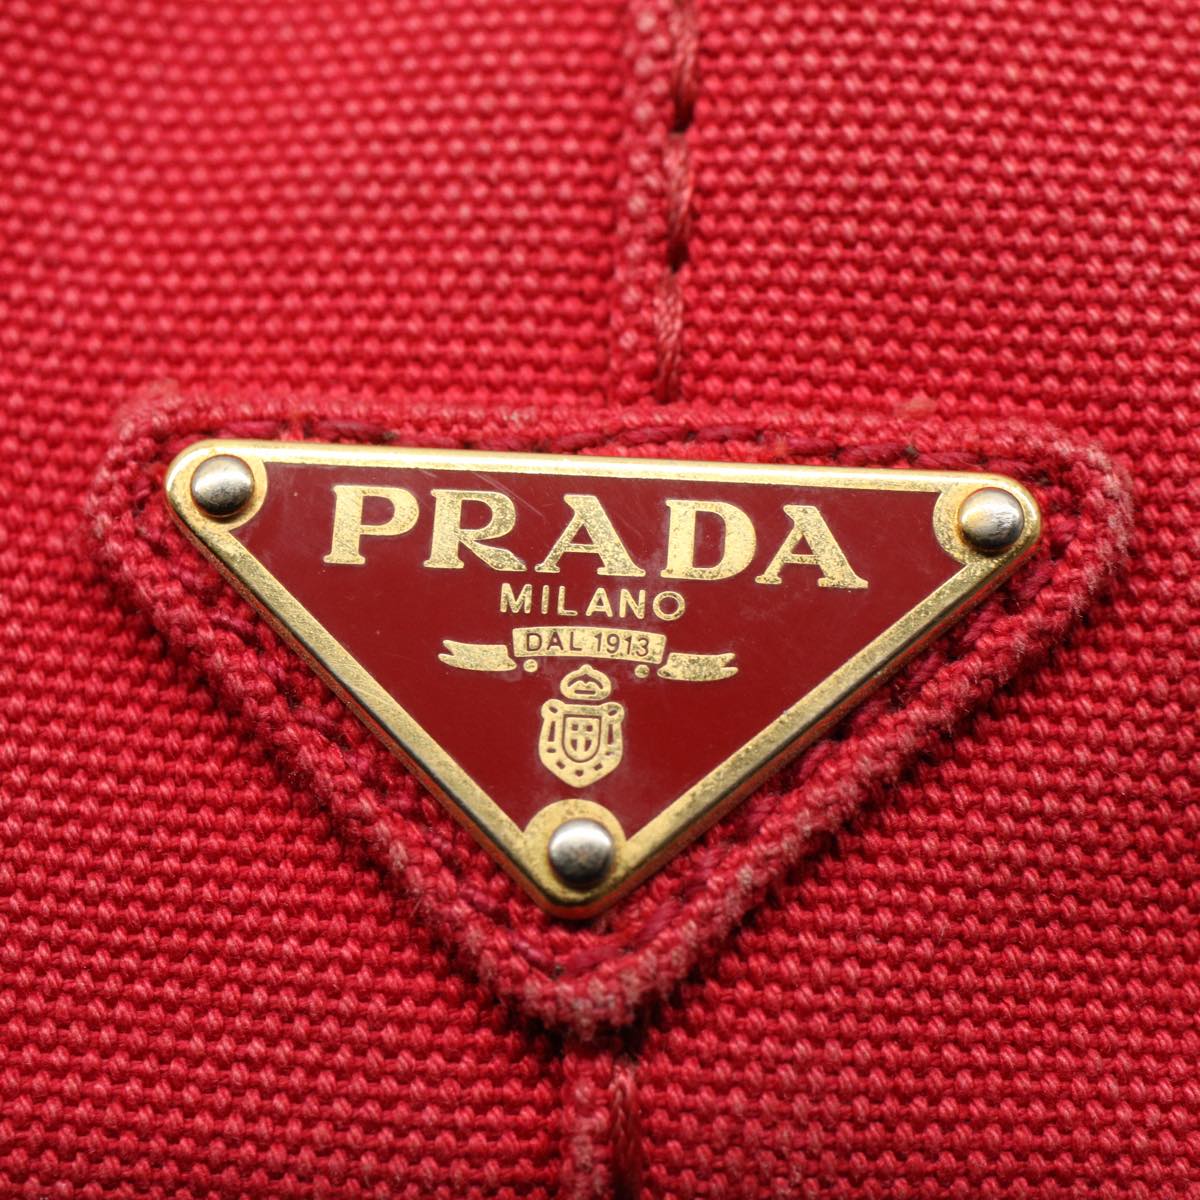 PRADA Canapa PM Hand Bag Canvas Red Auth ep2344